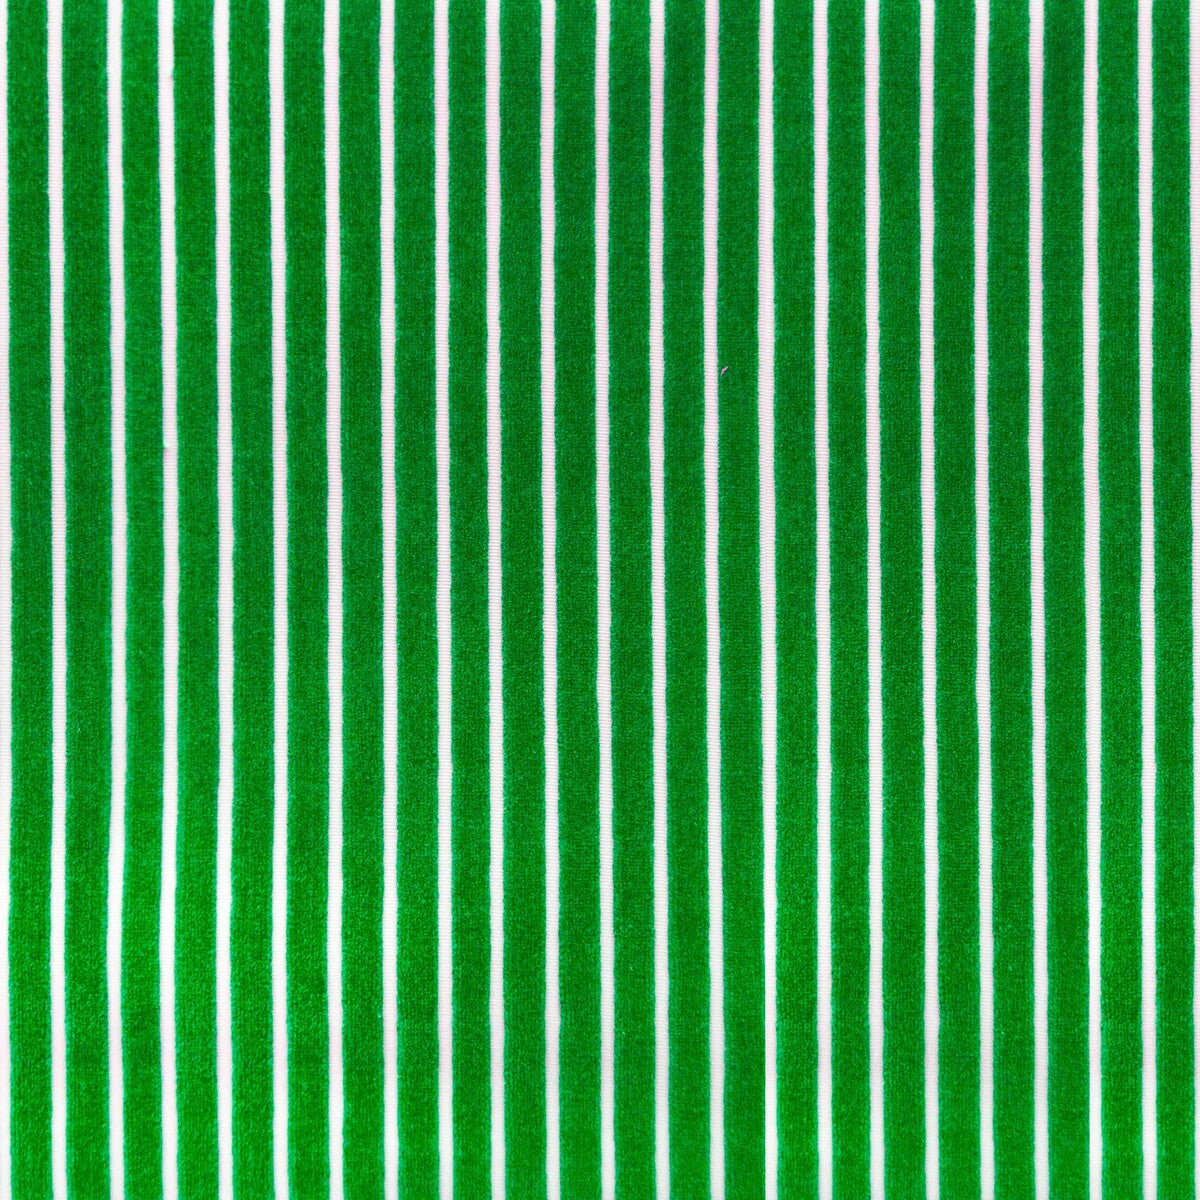 Mayrit fabric in verde billar color - pattern LCT1111.014.0 - by Gaston y Daniela in the Lorenzo Castillo IX Hesperia collection